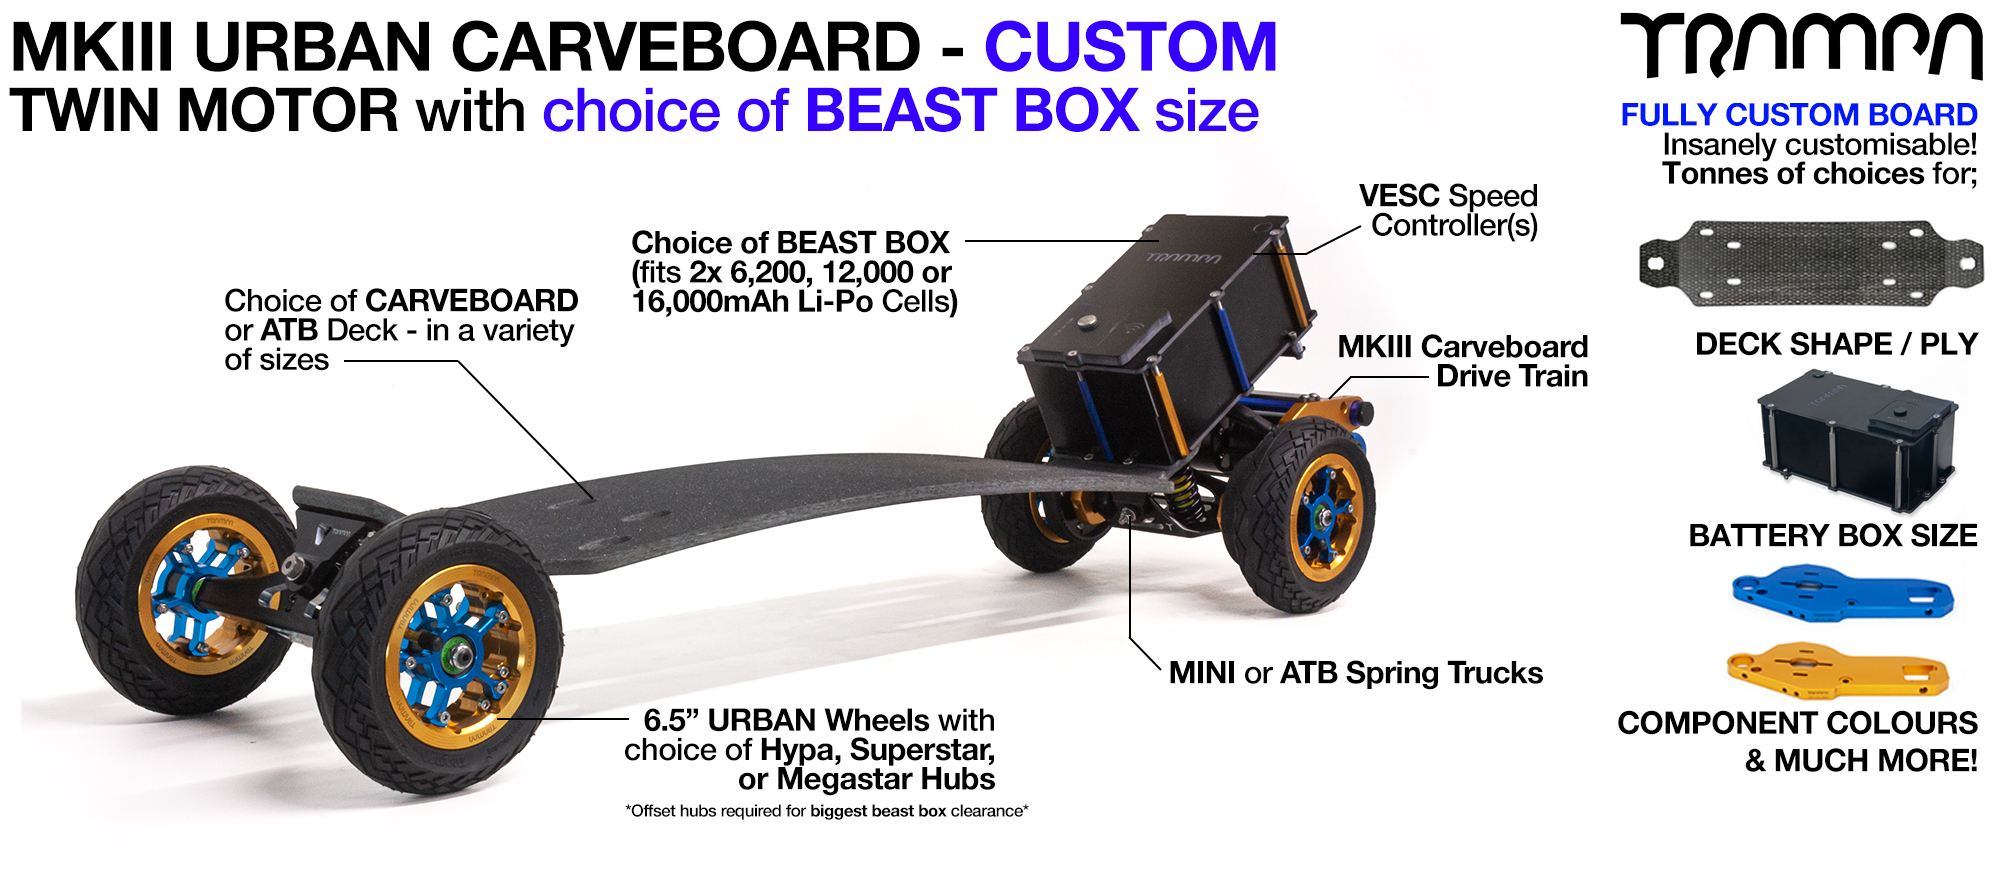 TRAMPA's MkIII Electric URBAN Carveboard - uses Mini Spring Trucks with MkIII Carve board Motor Mount's Custom TRAMPA hubs & 125mm URBAN longboard Tyres - TWIN Motor CUSTOM